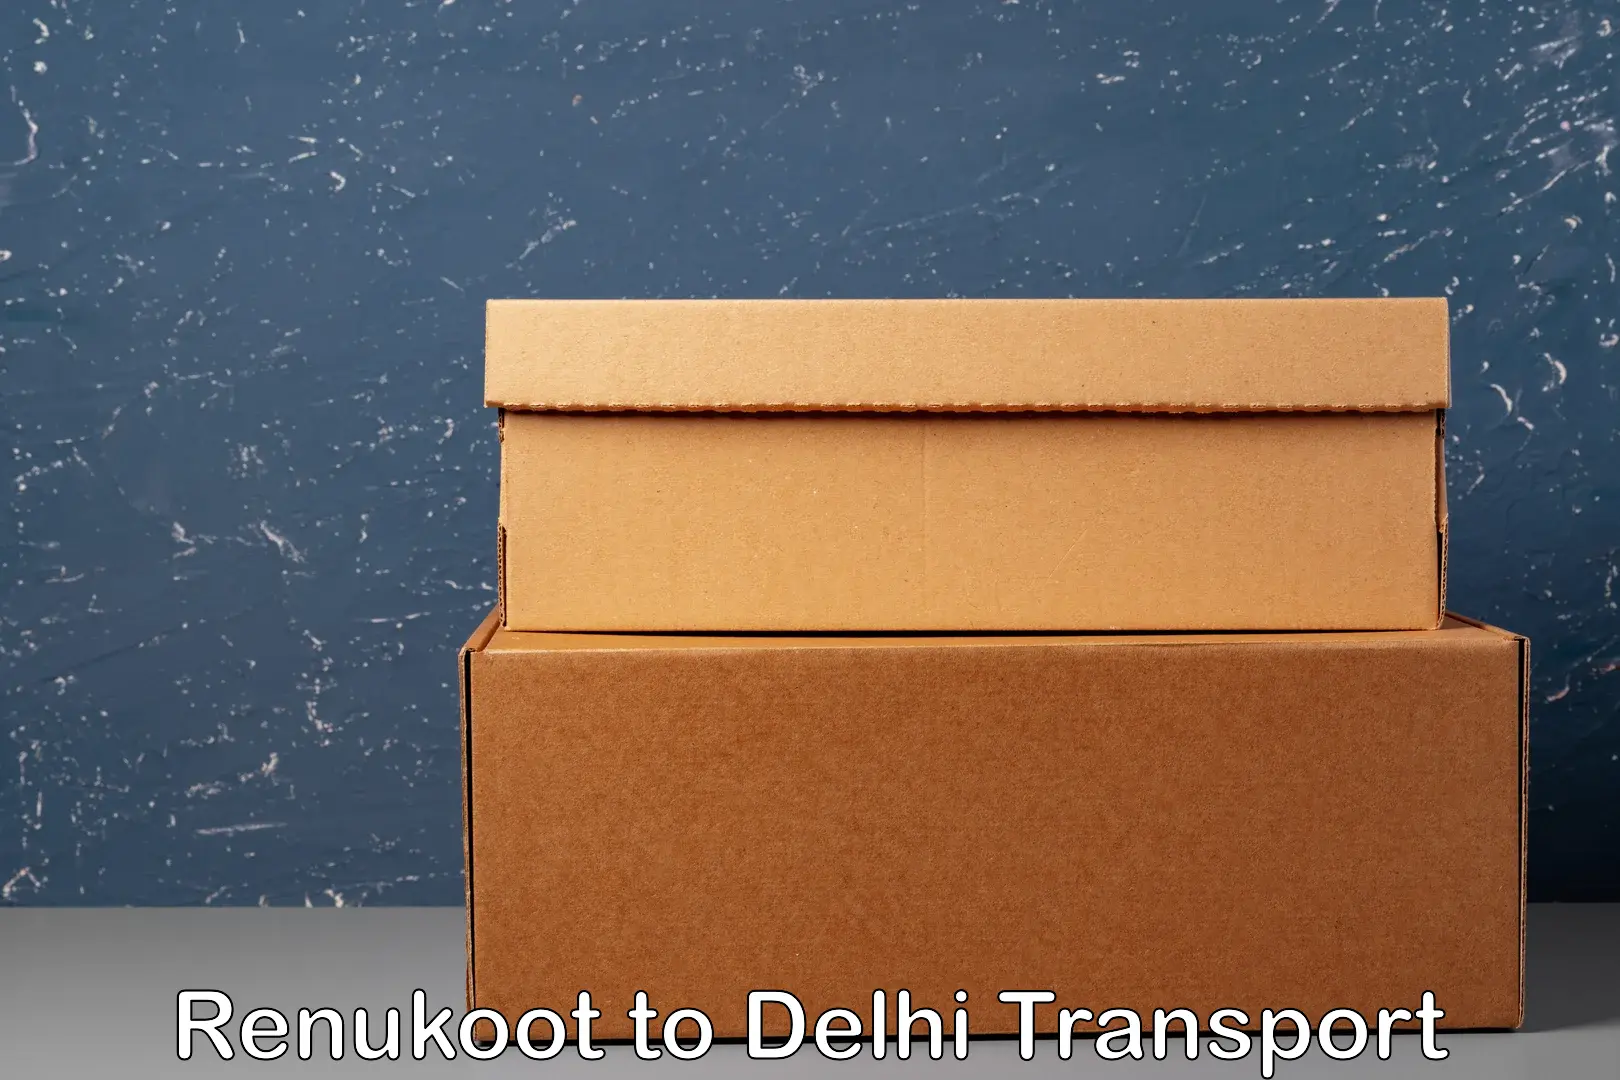 Daily transport service Renukoot to East Delhi